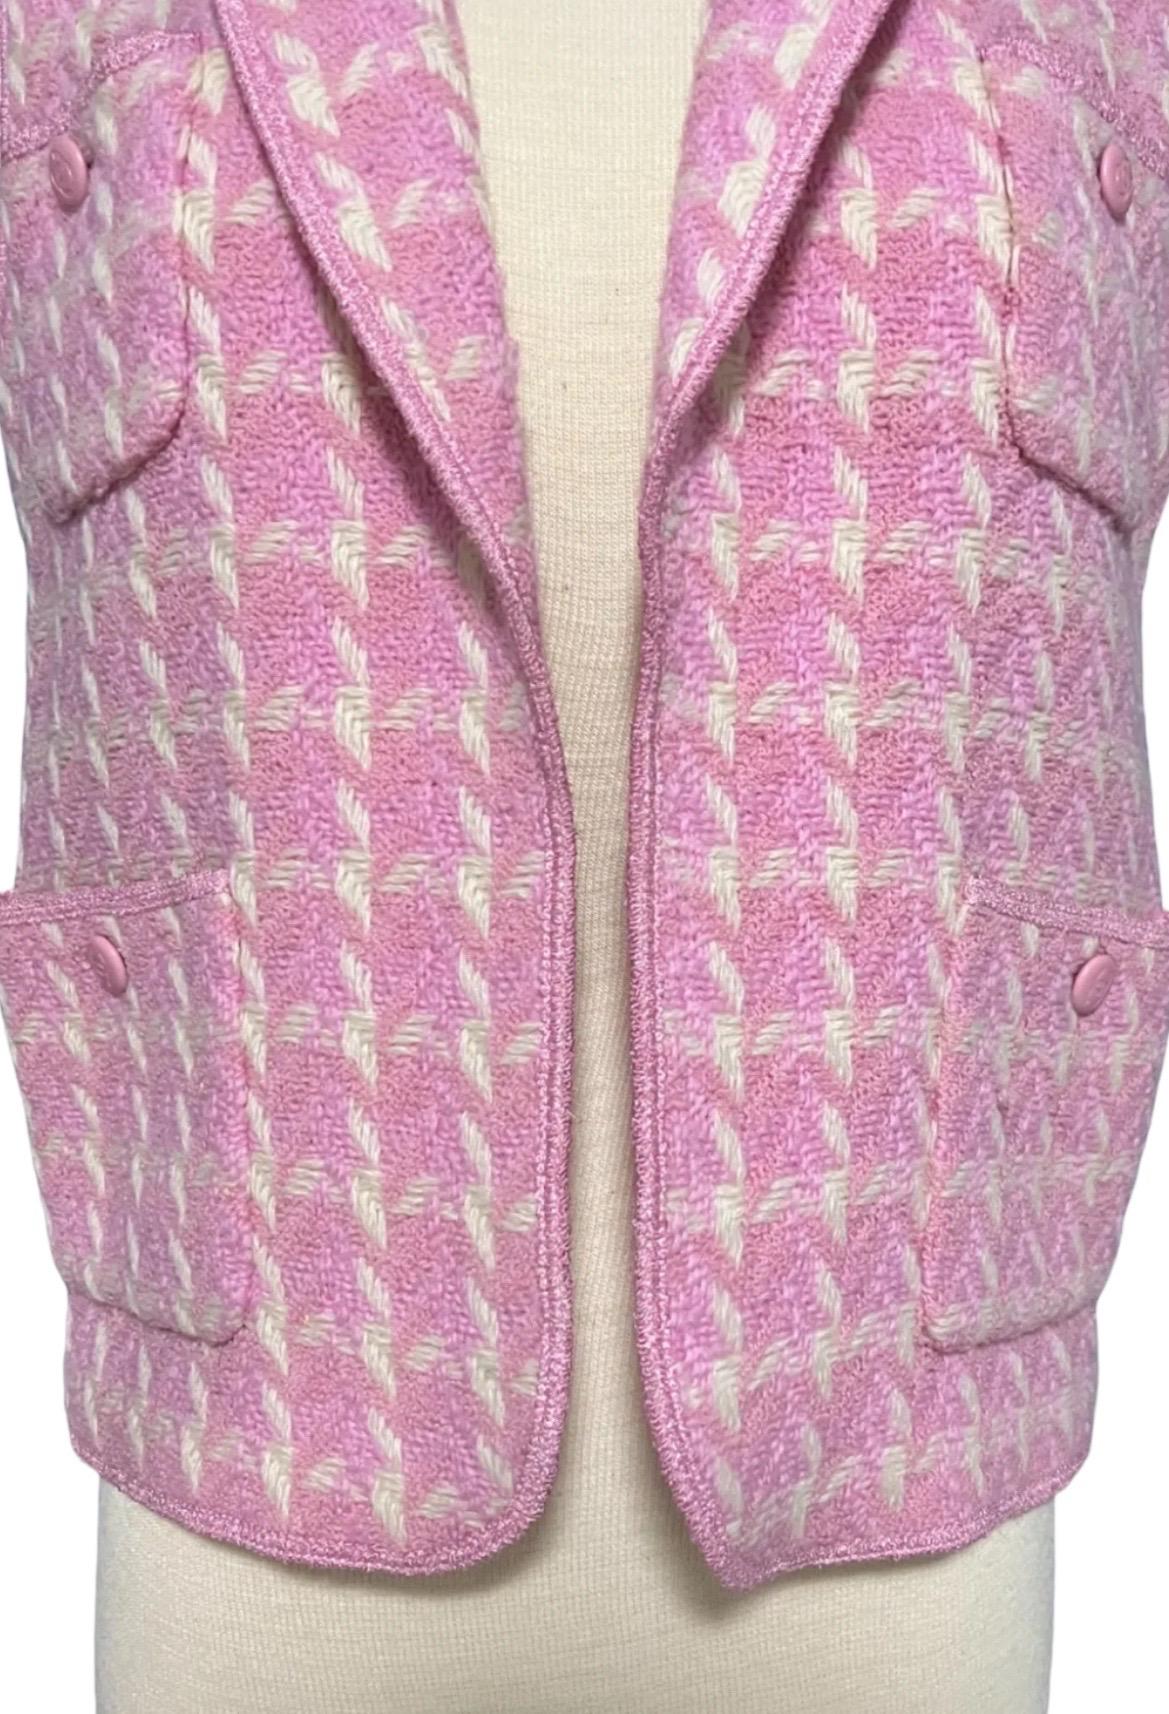 Women's S/S 1996 Chanel Pink Plaid Gingham Wool Vintage Runway Vest 